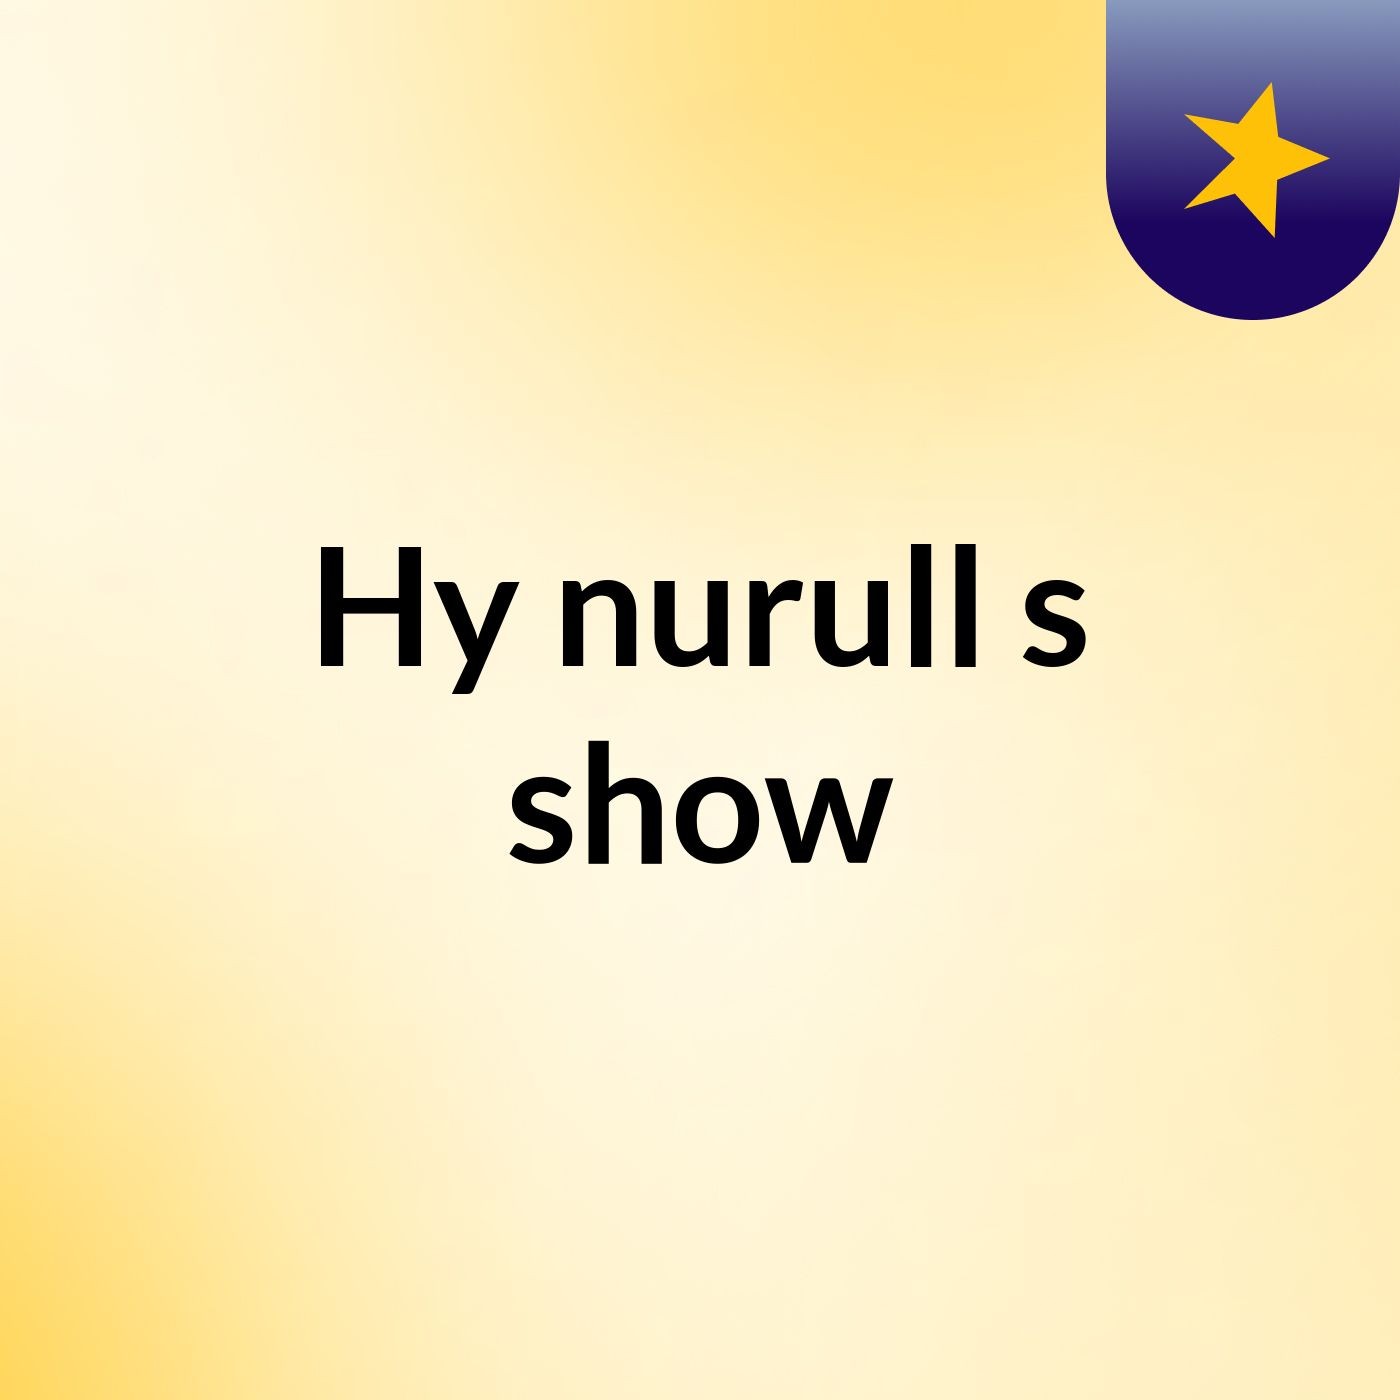 Hy nurull's show